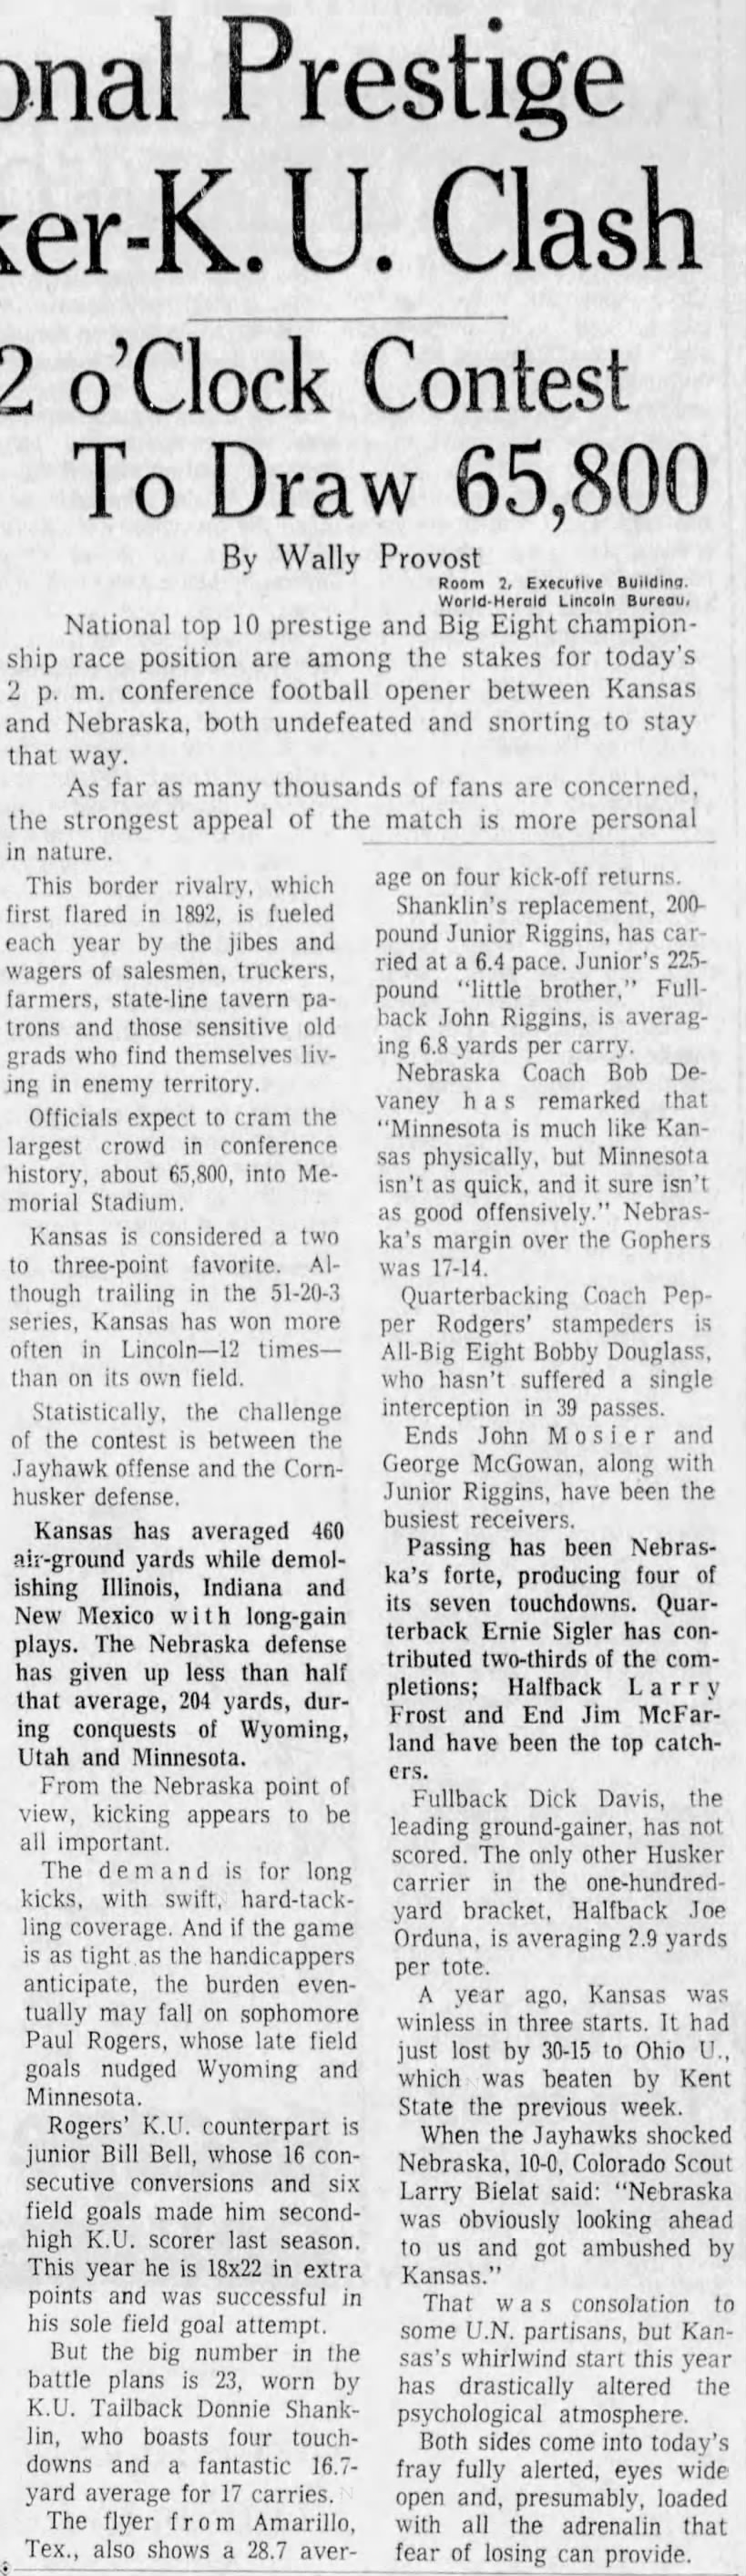 1968 Nebraska-Kansas football preview